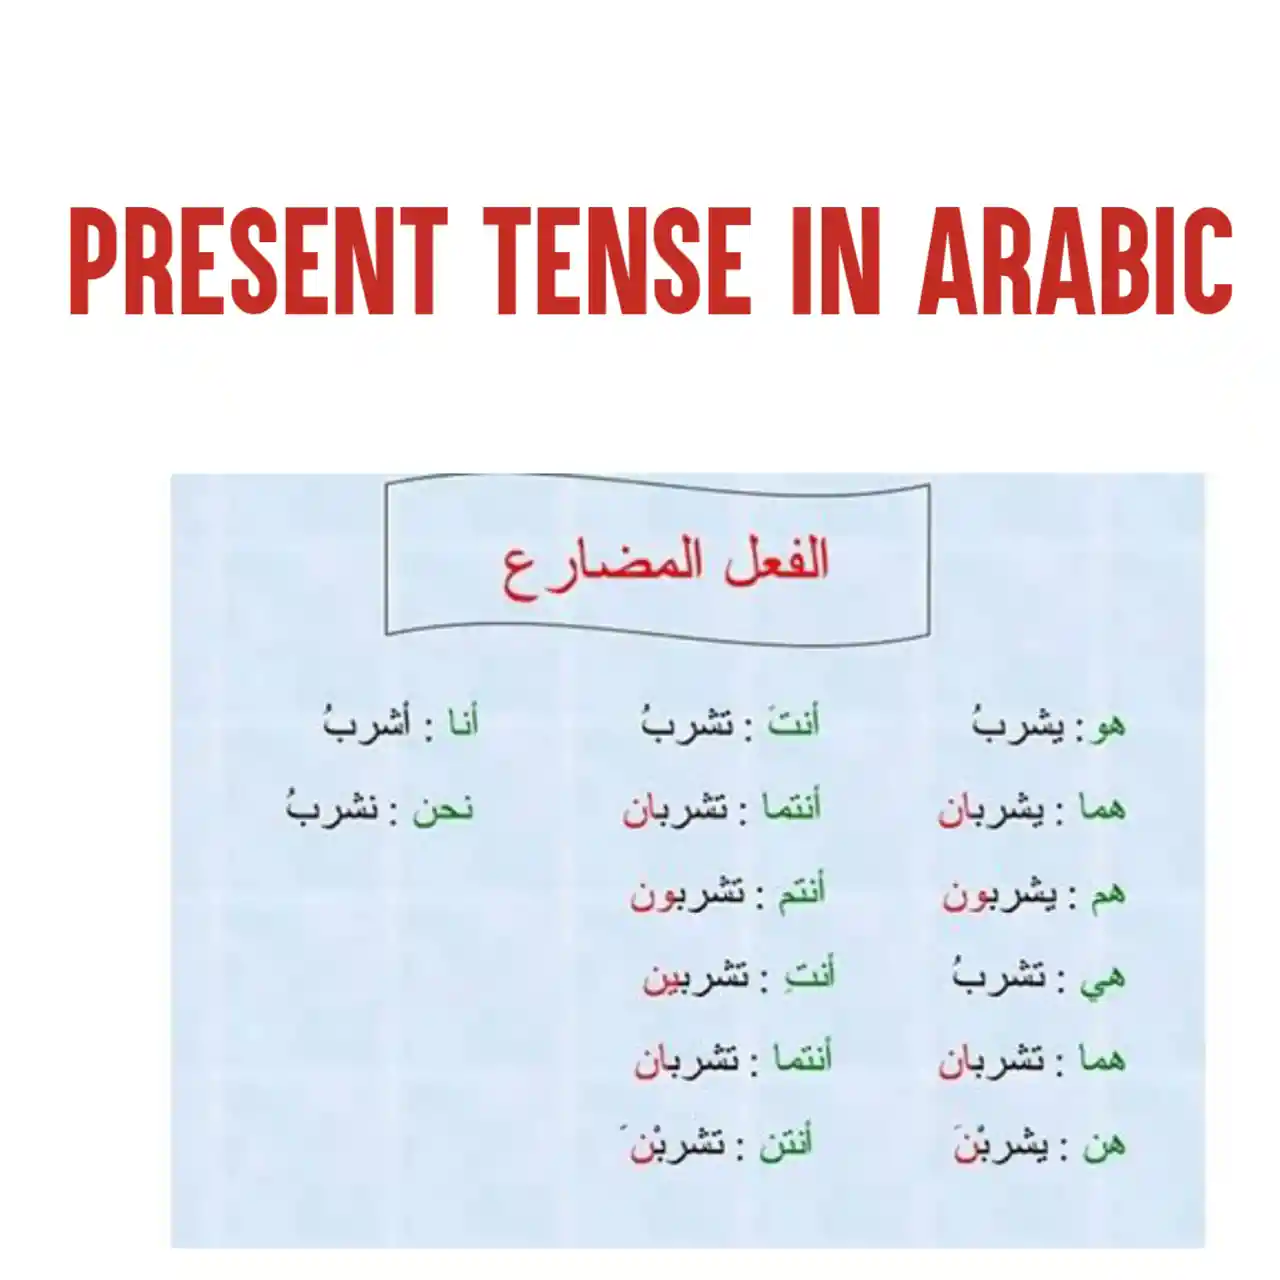 present tense in Arabic